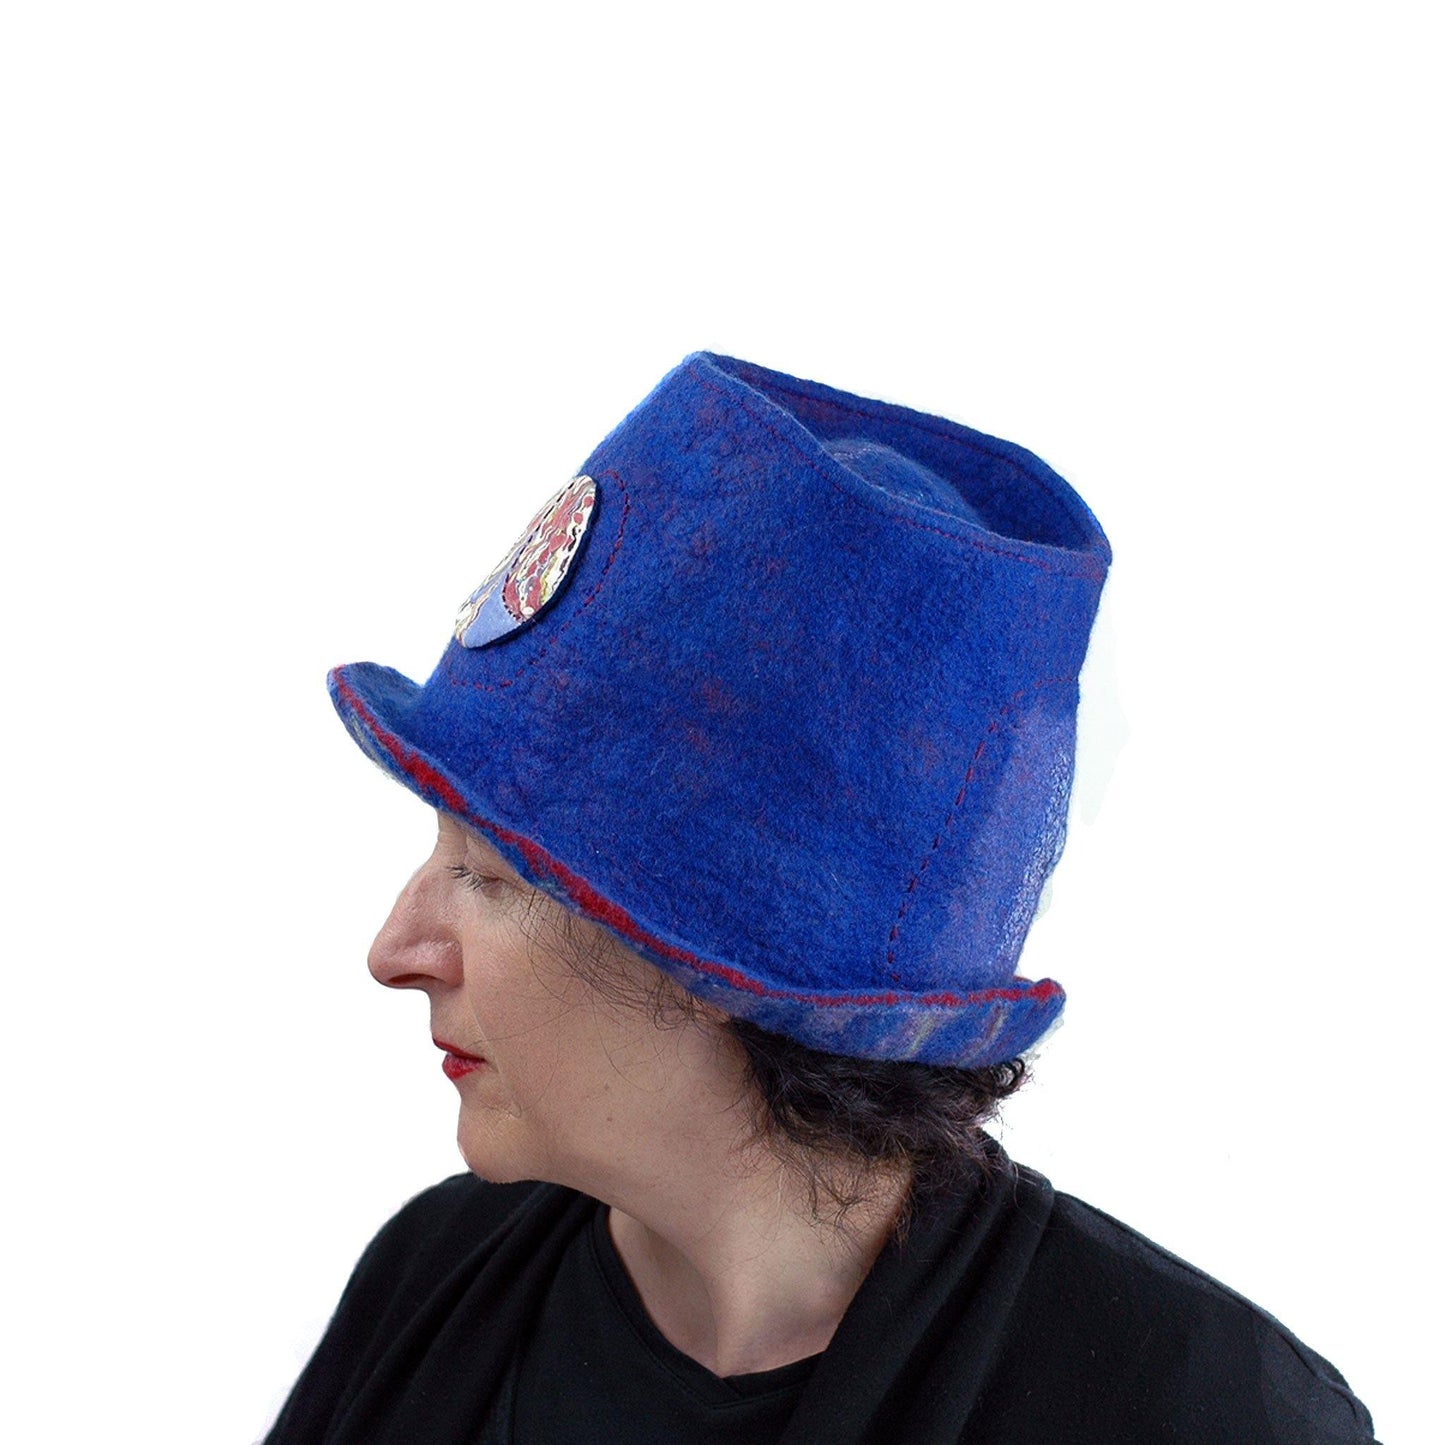 Blue Pilgrim Top Hat with Brim - Left side view